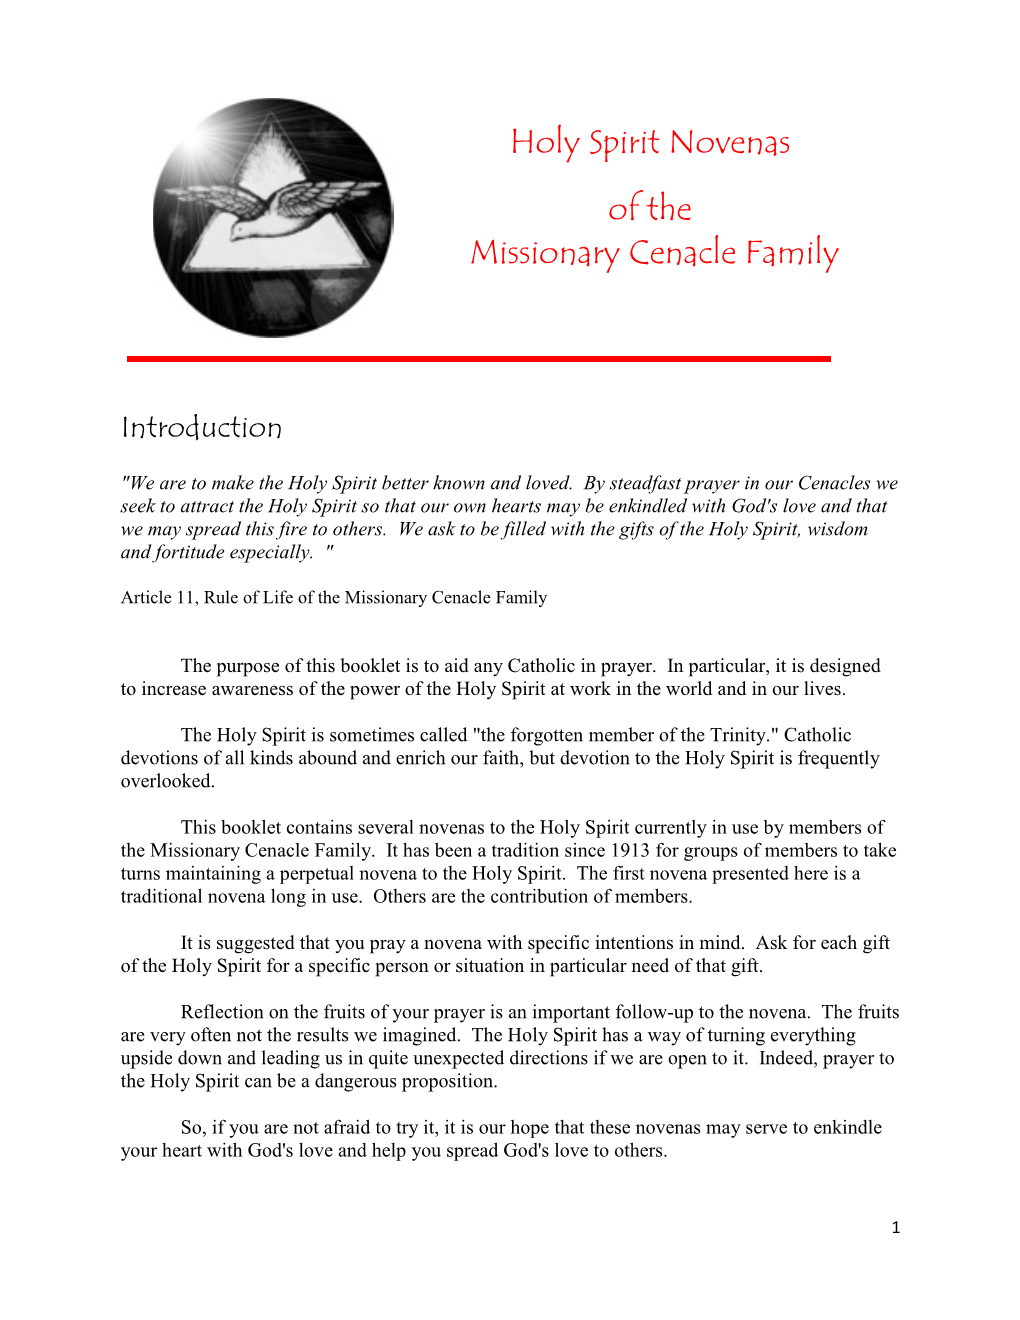 Holy Spirit Novenas of the Missionary Cenacle Family